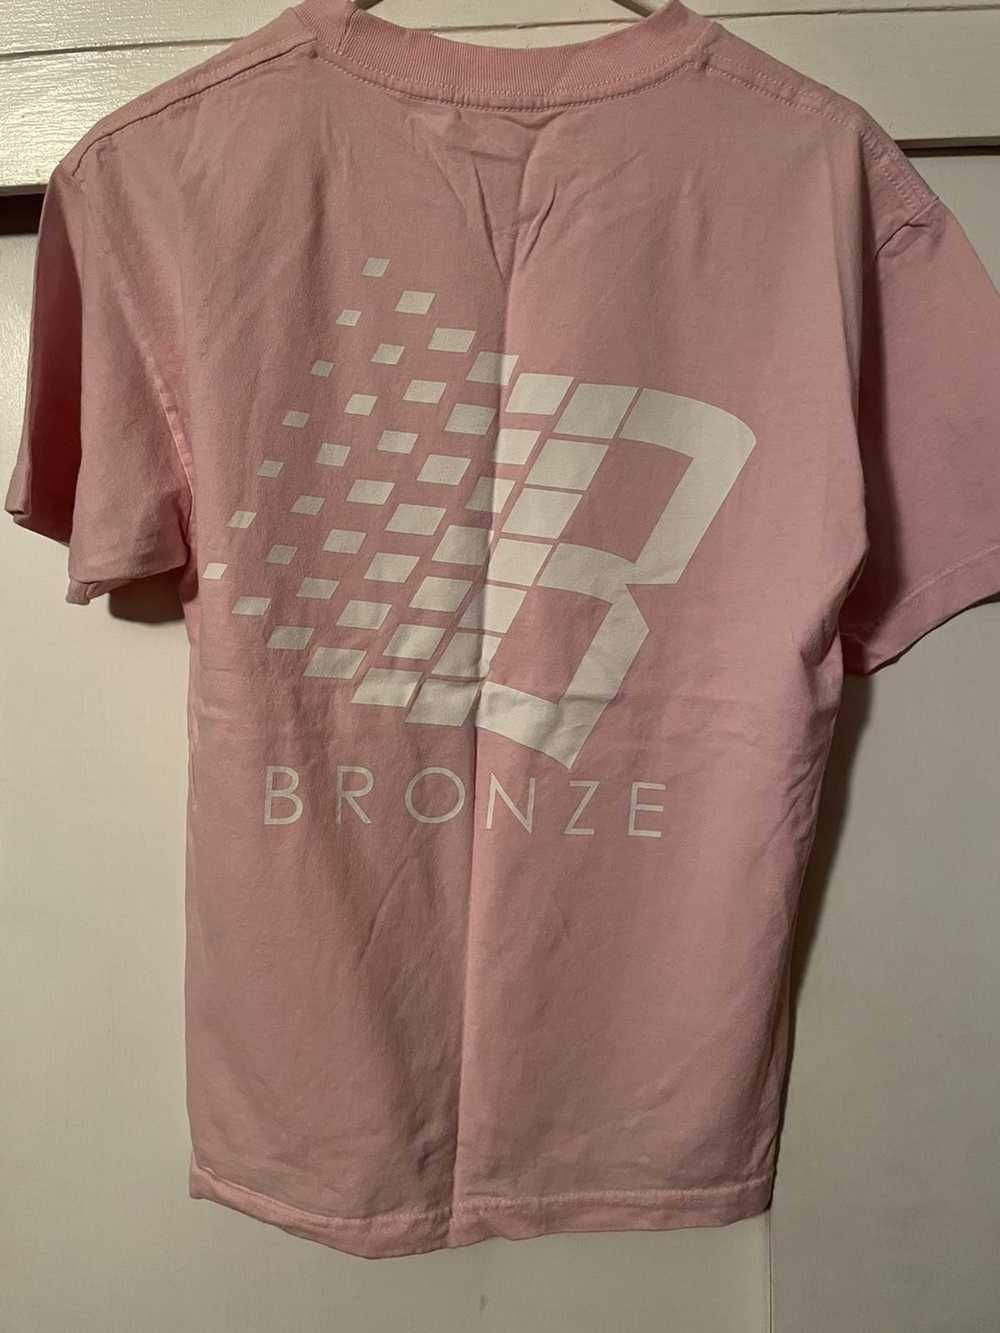 Bronze 56k Bronze56k Windows Logo Pink Shirt - image 2